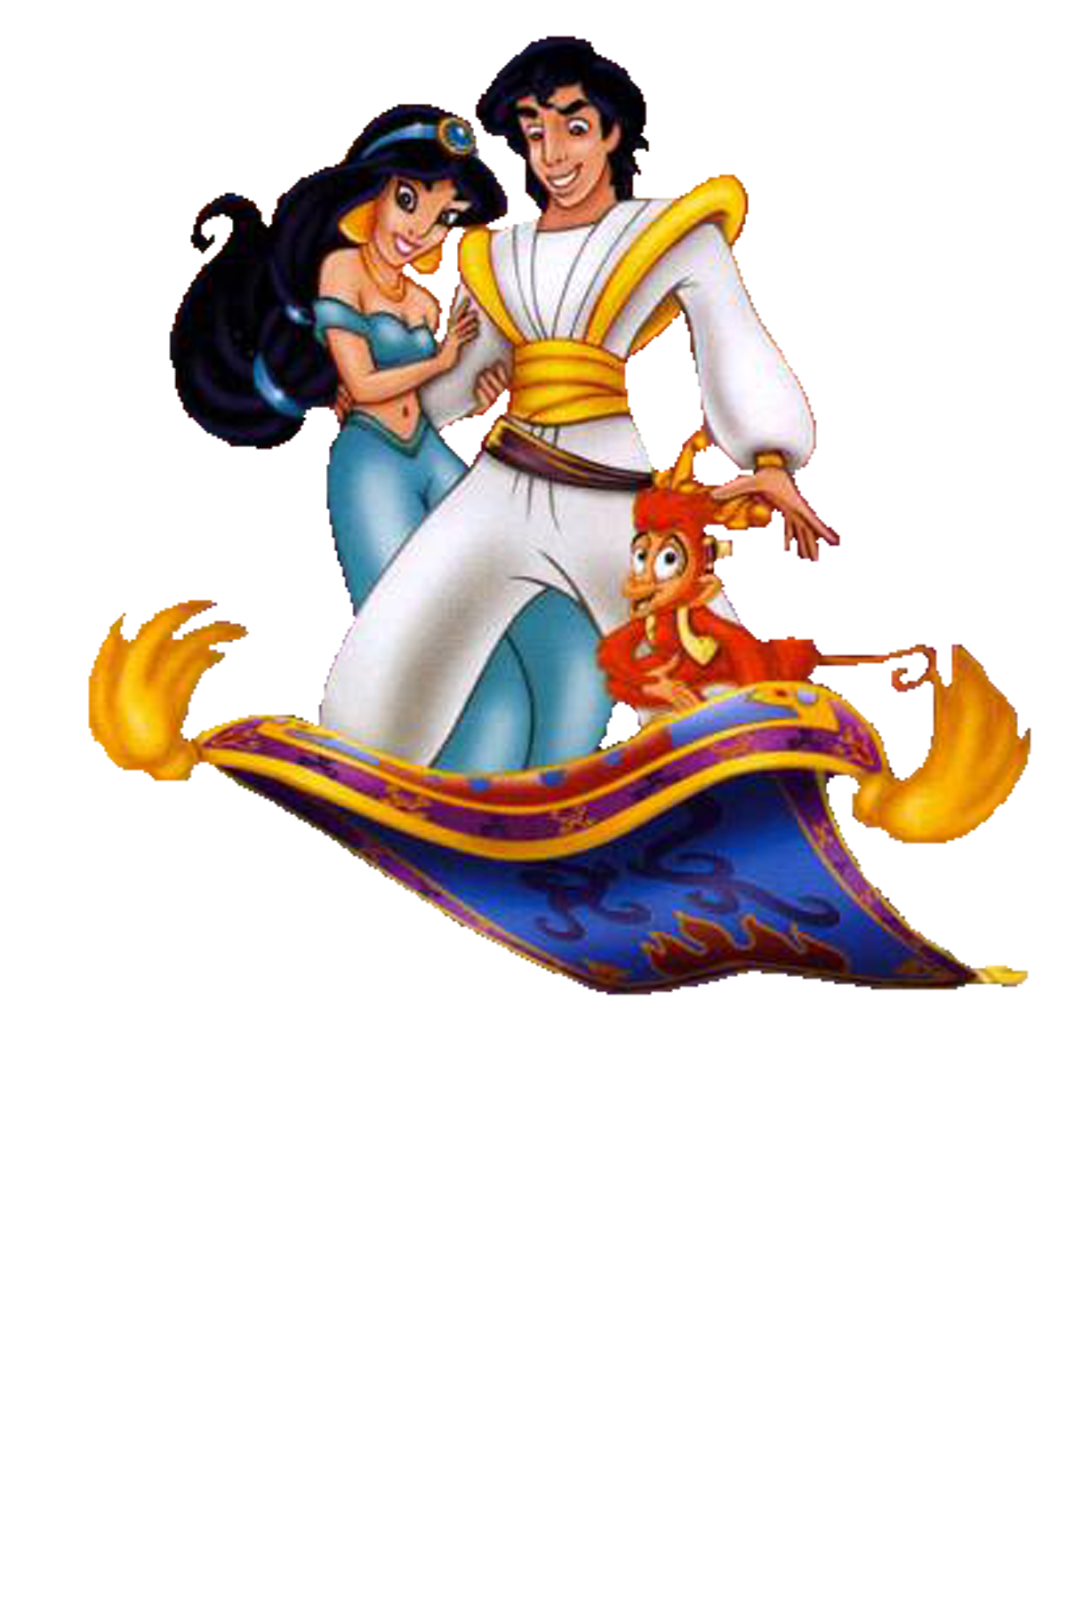 Download Aladdin Photo HQ PNG Image FreePNGImg